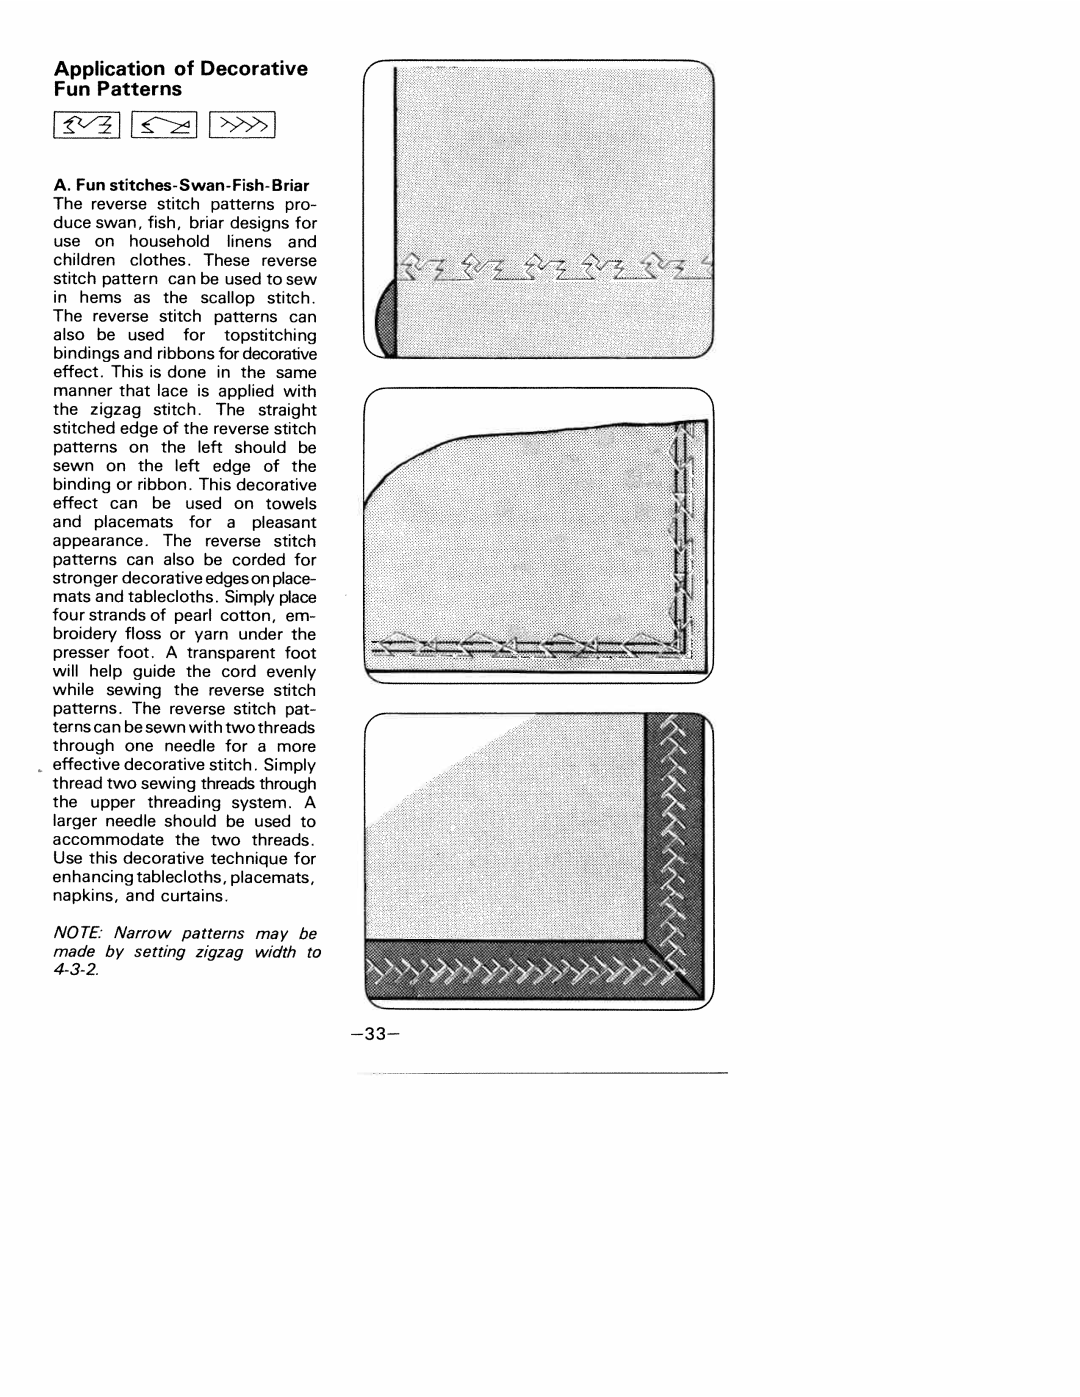 White 1927 manual Fun Patterns, Application of Decorative 